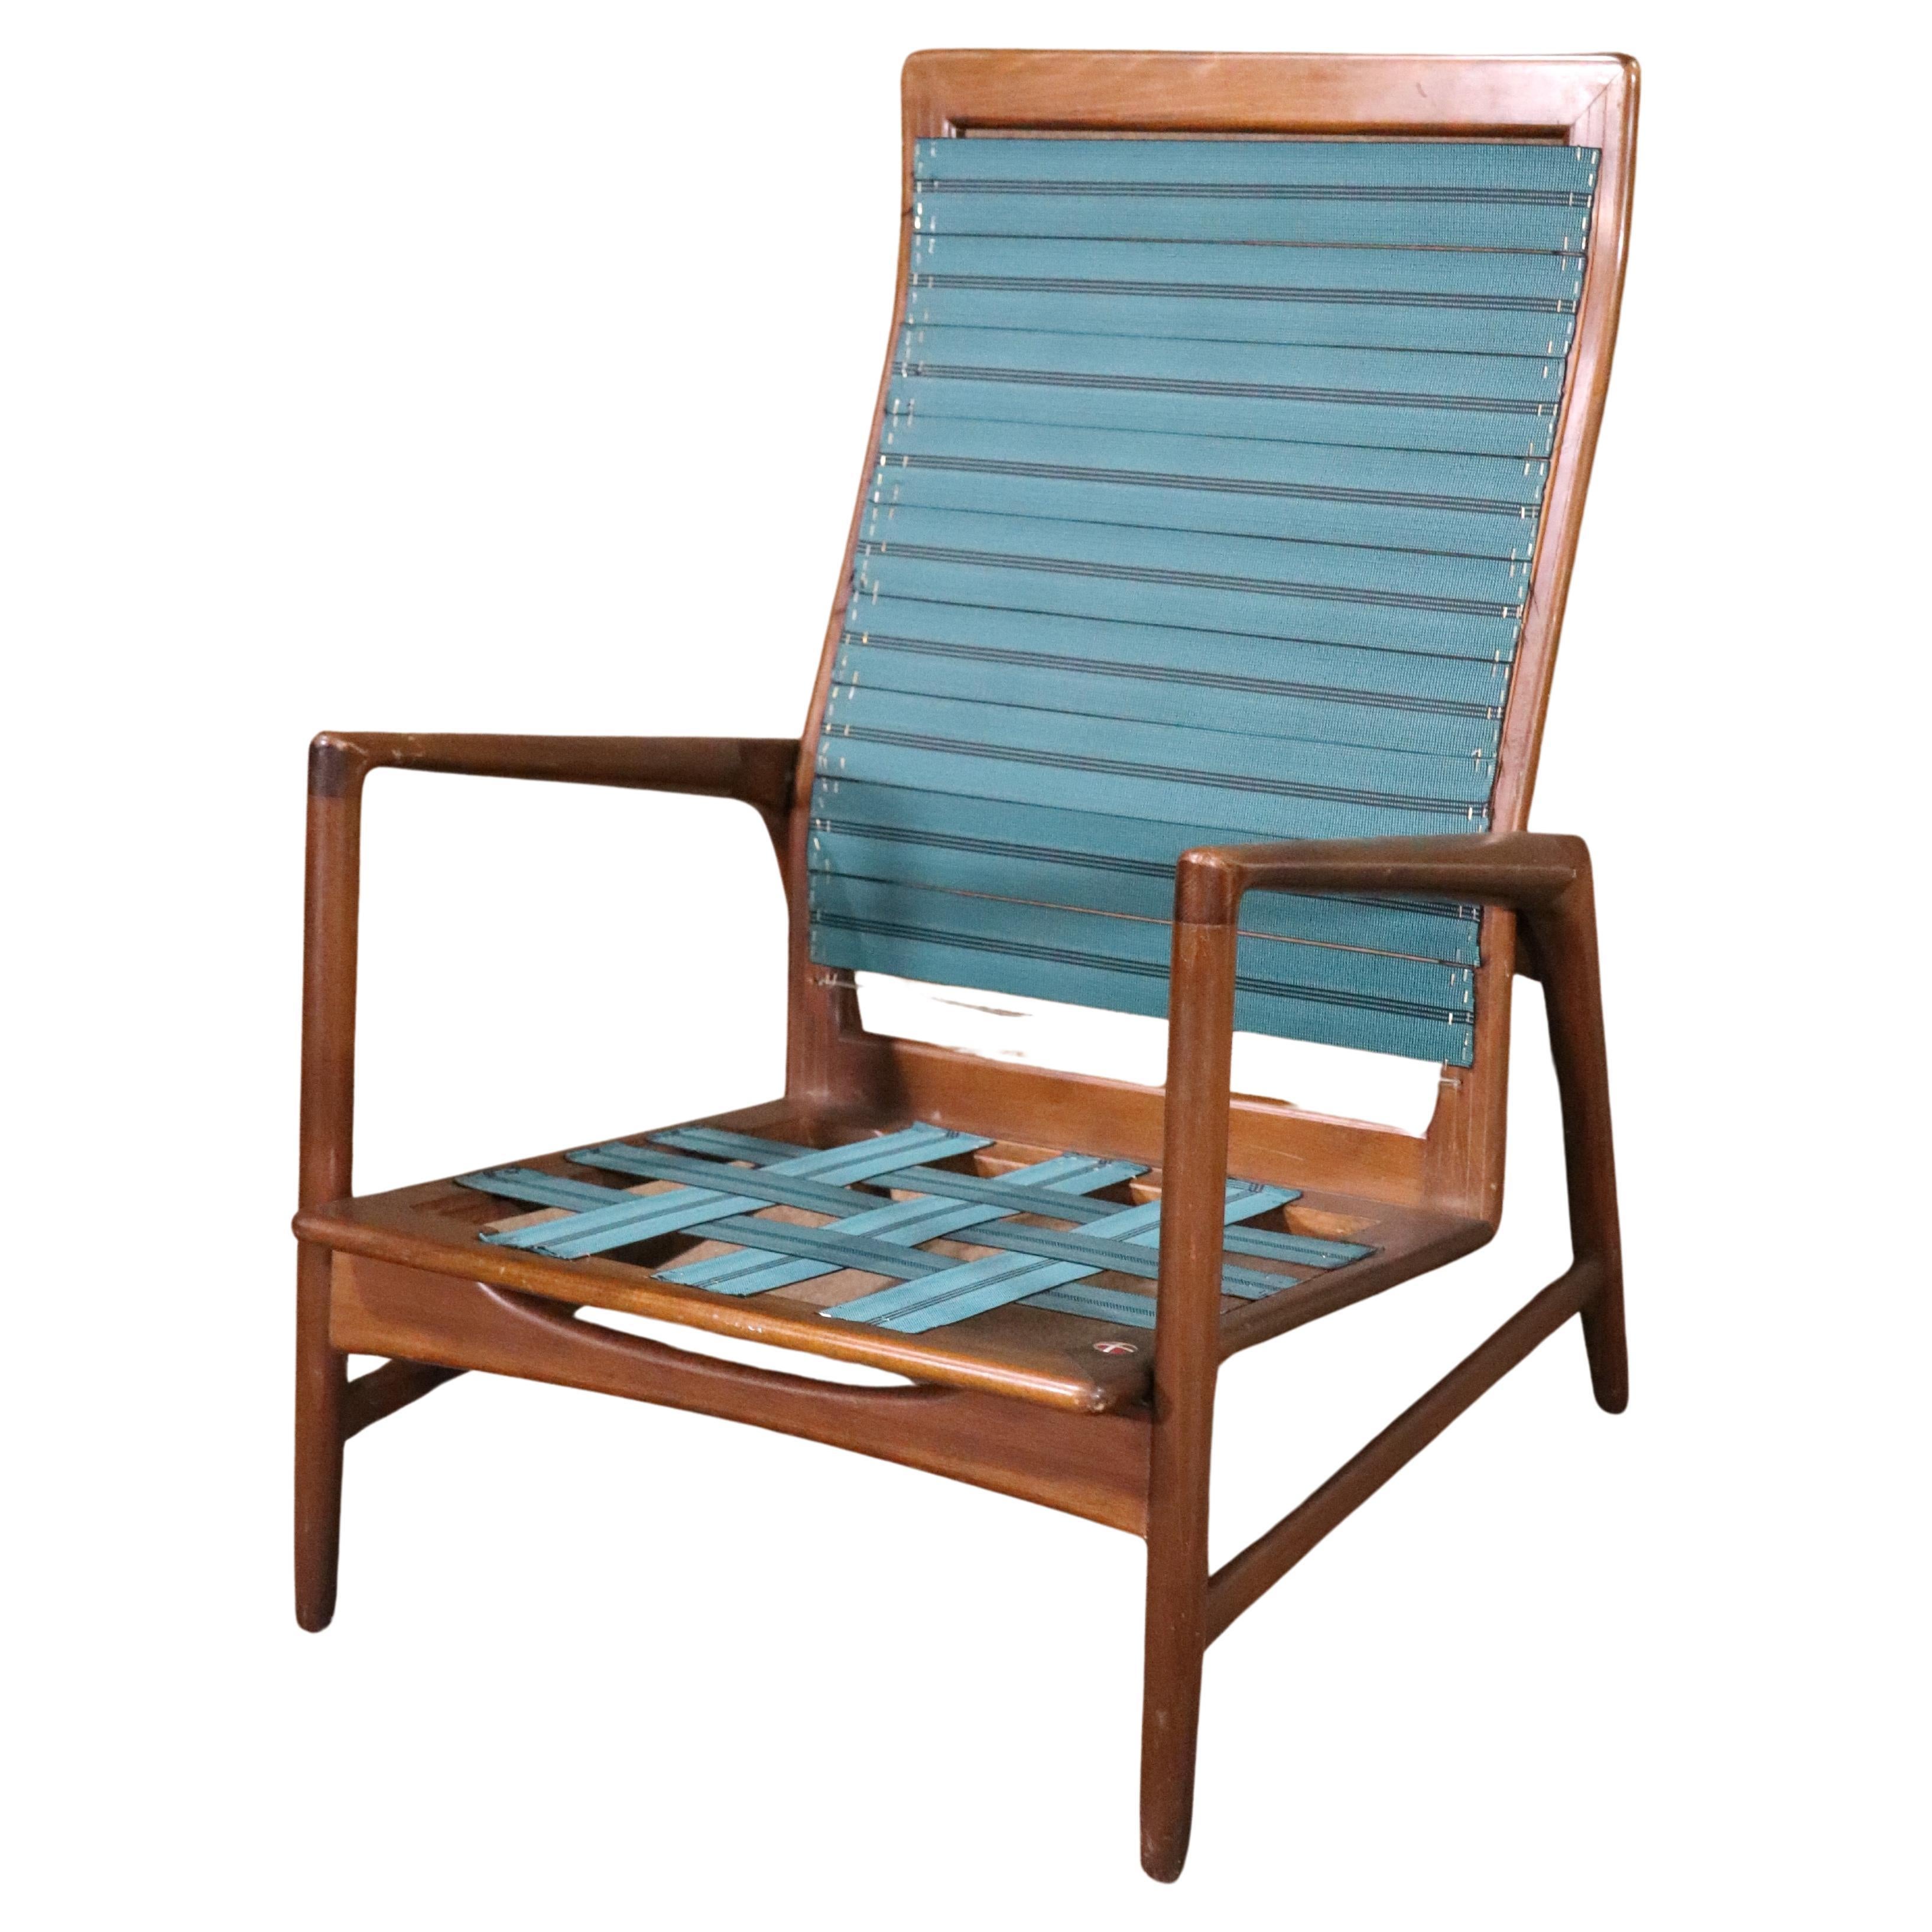 Ib Kofod-Larsen Sculpted Reclining Lounge Chair